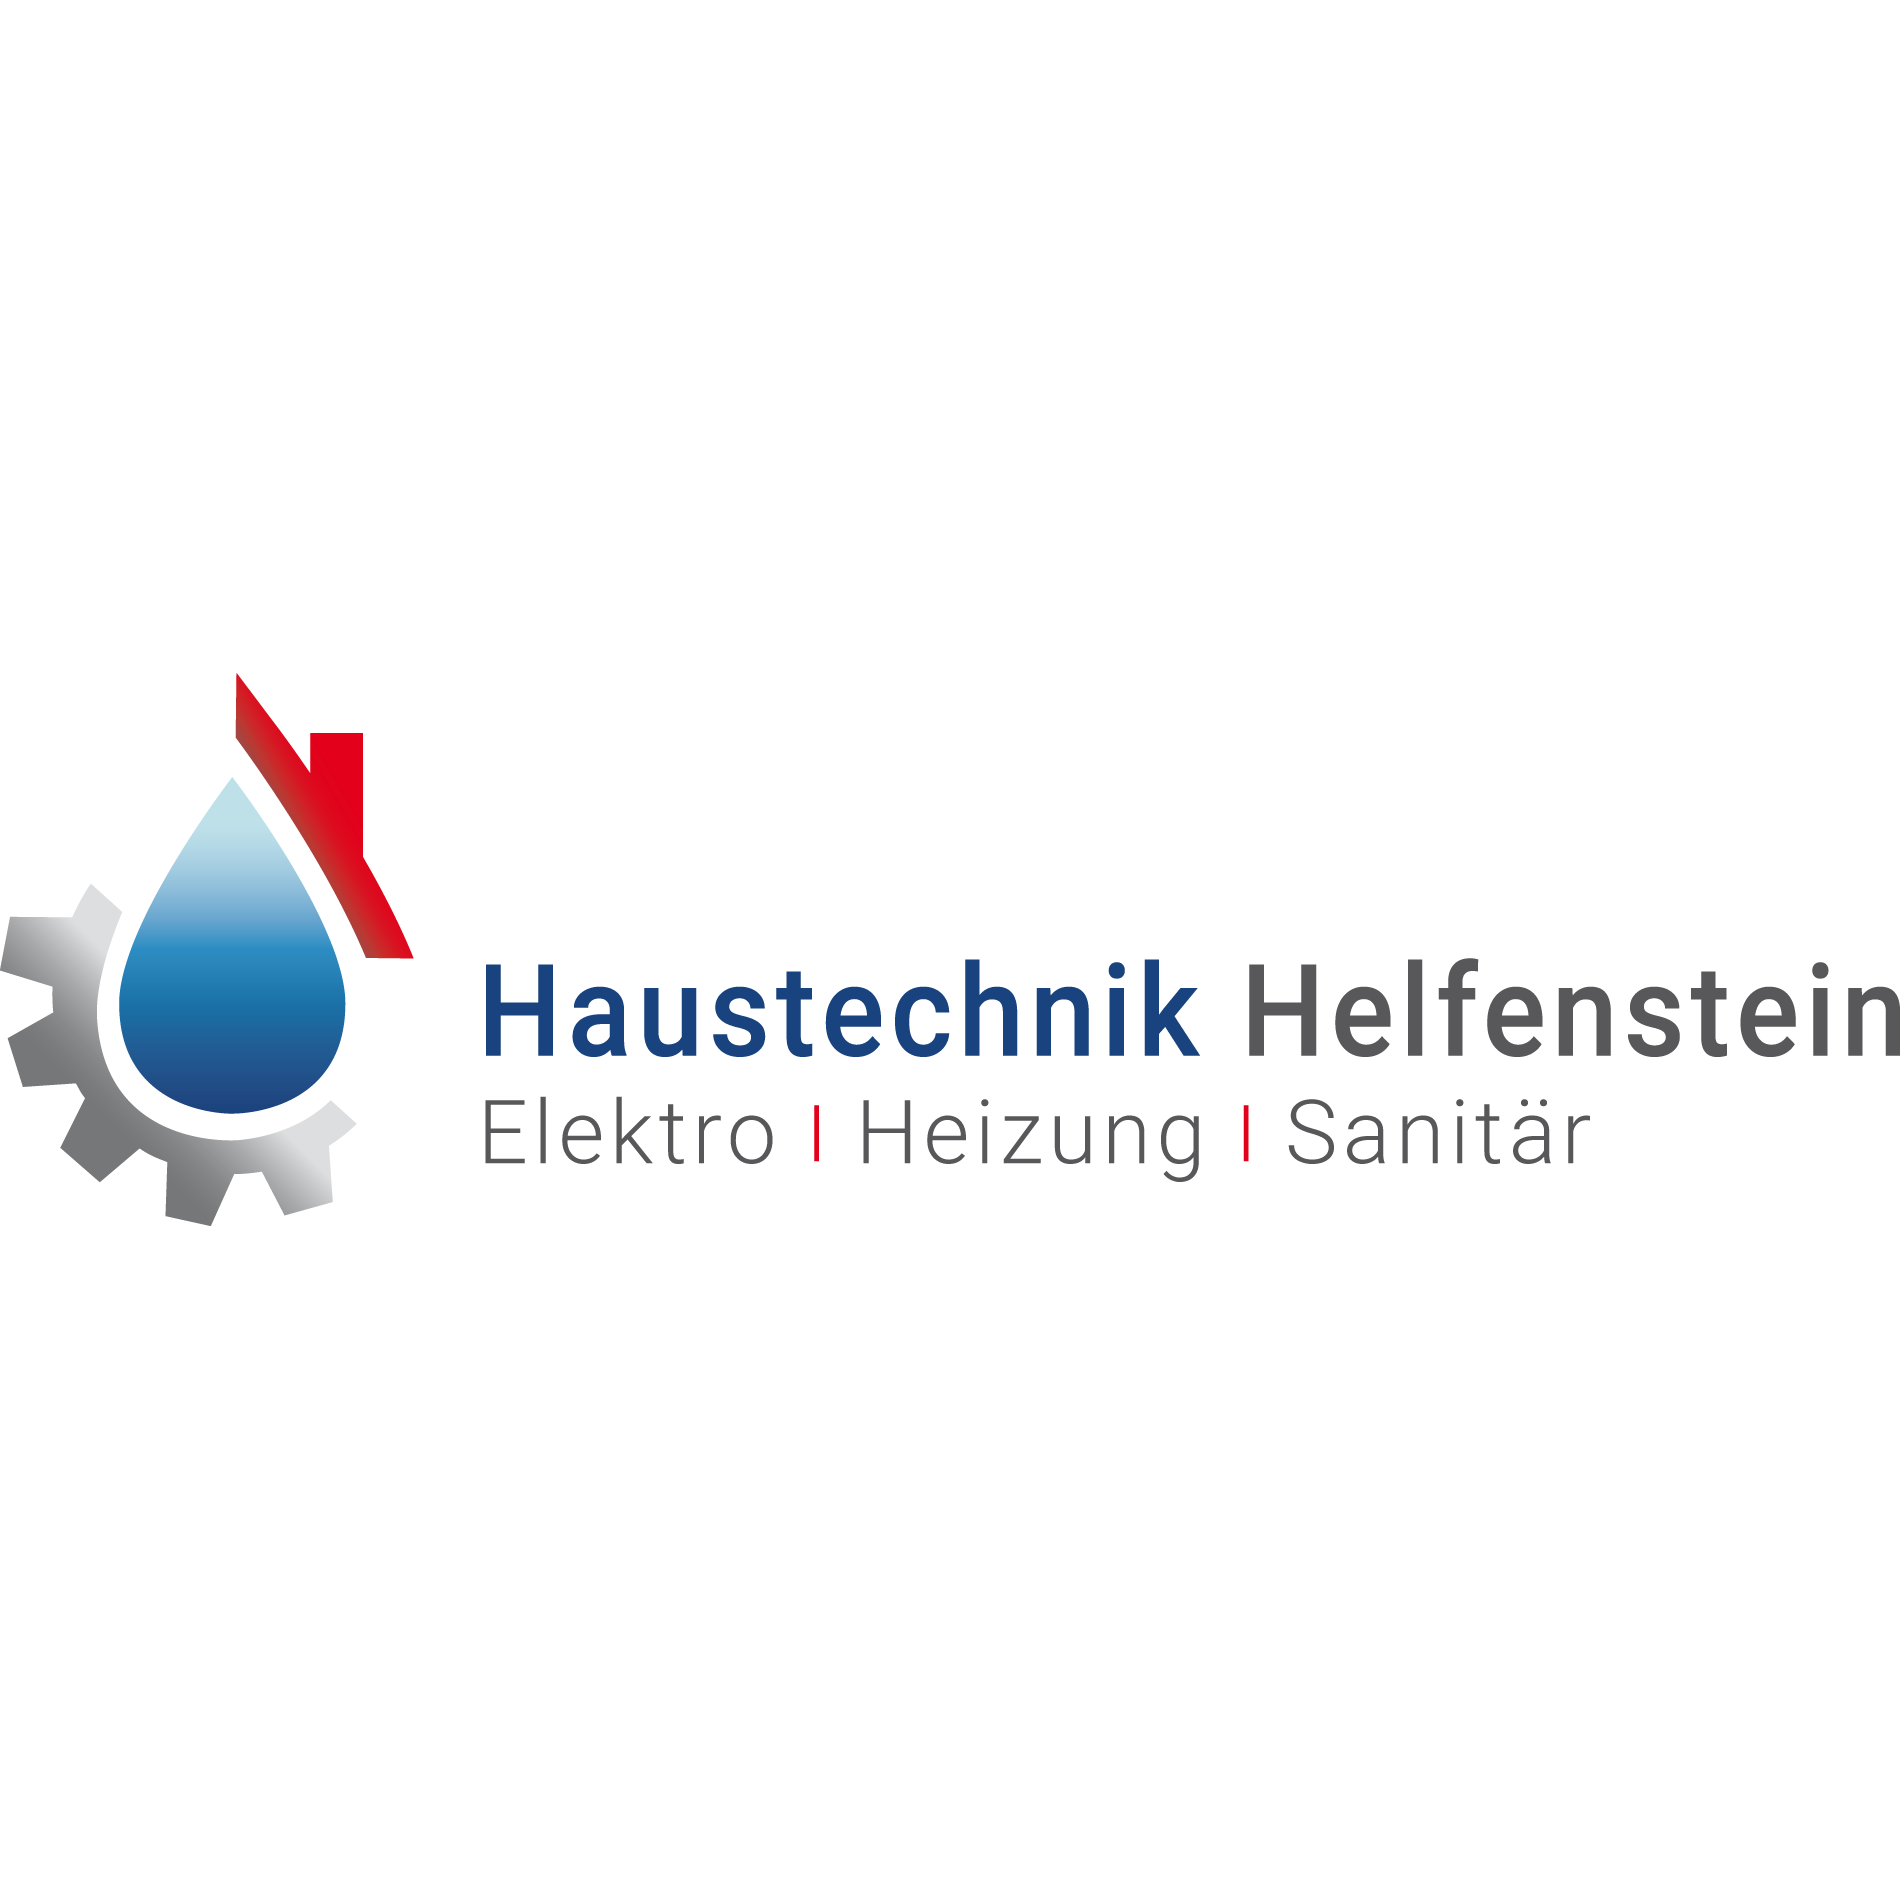 Haustechnik Helfenstein in Hünfelden - Logo